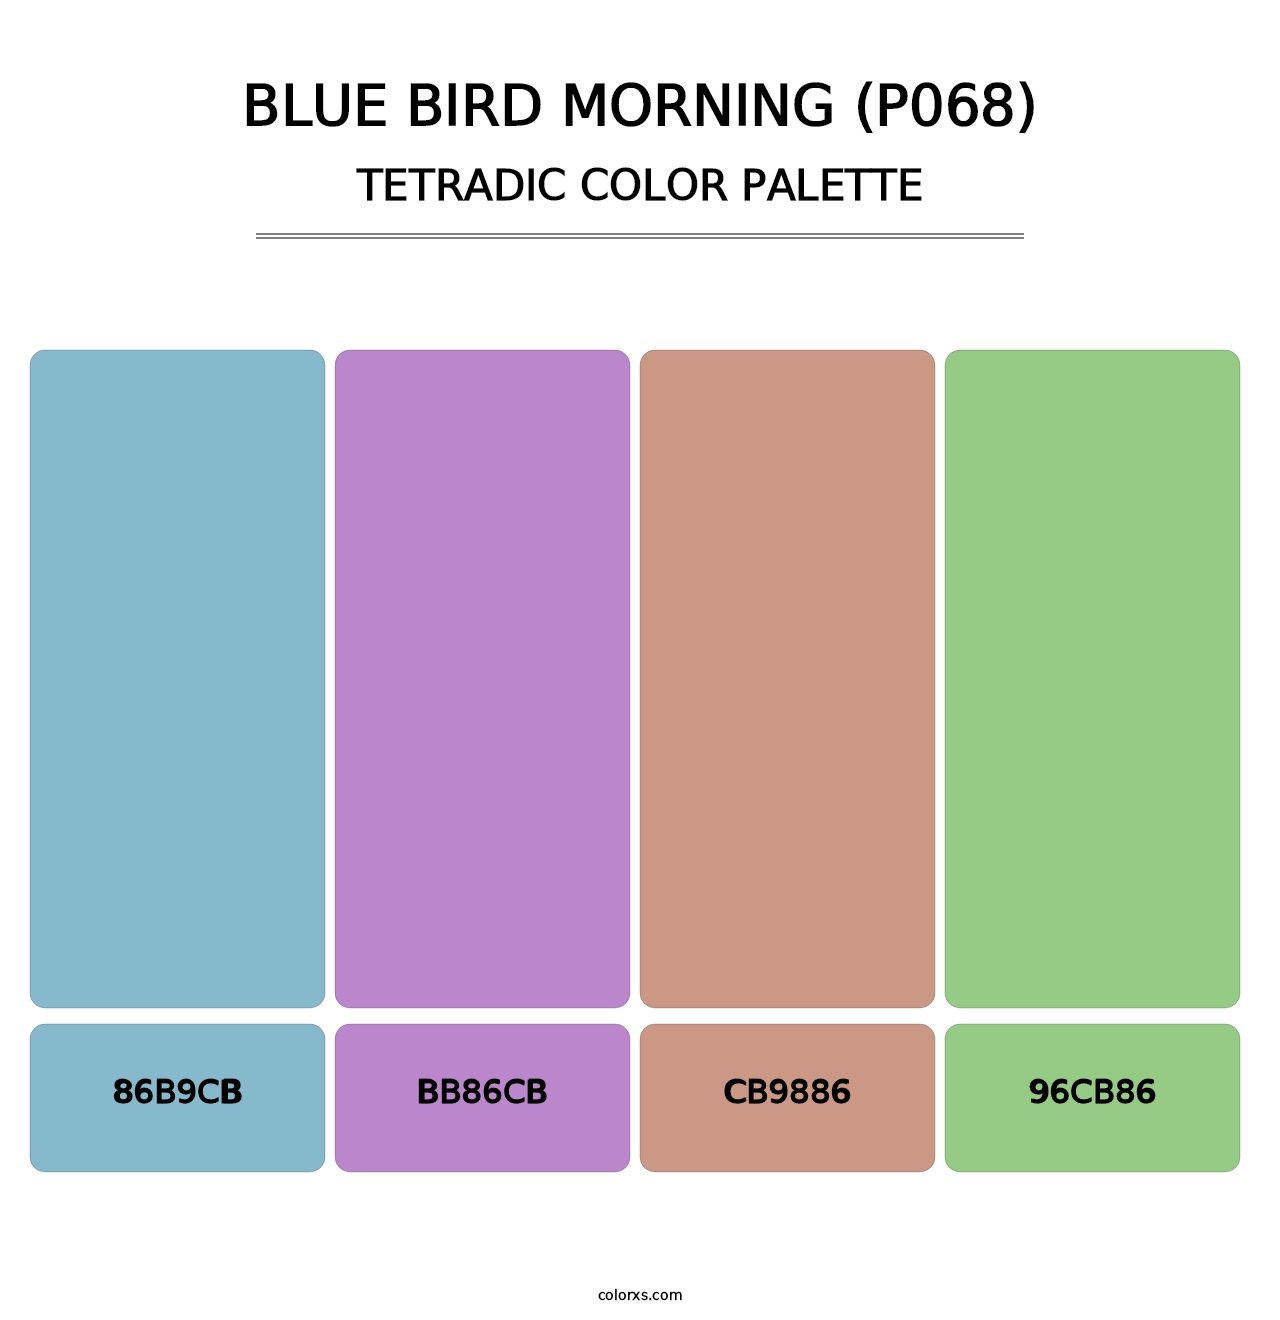 Blue Bird Morning (P068) - Tetradic Color Palette